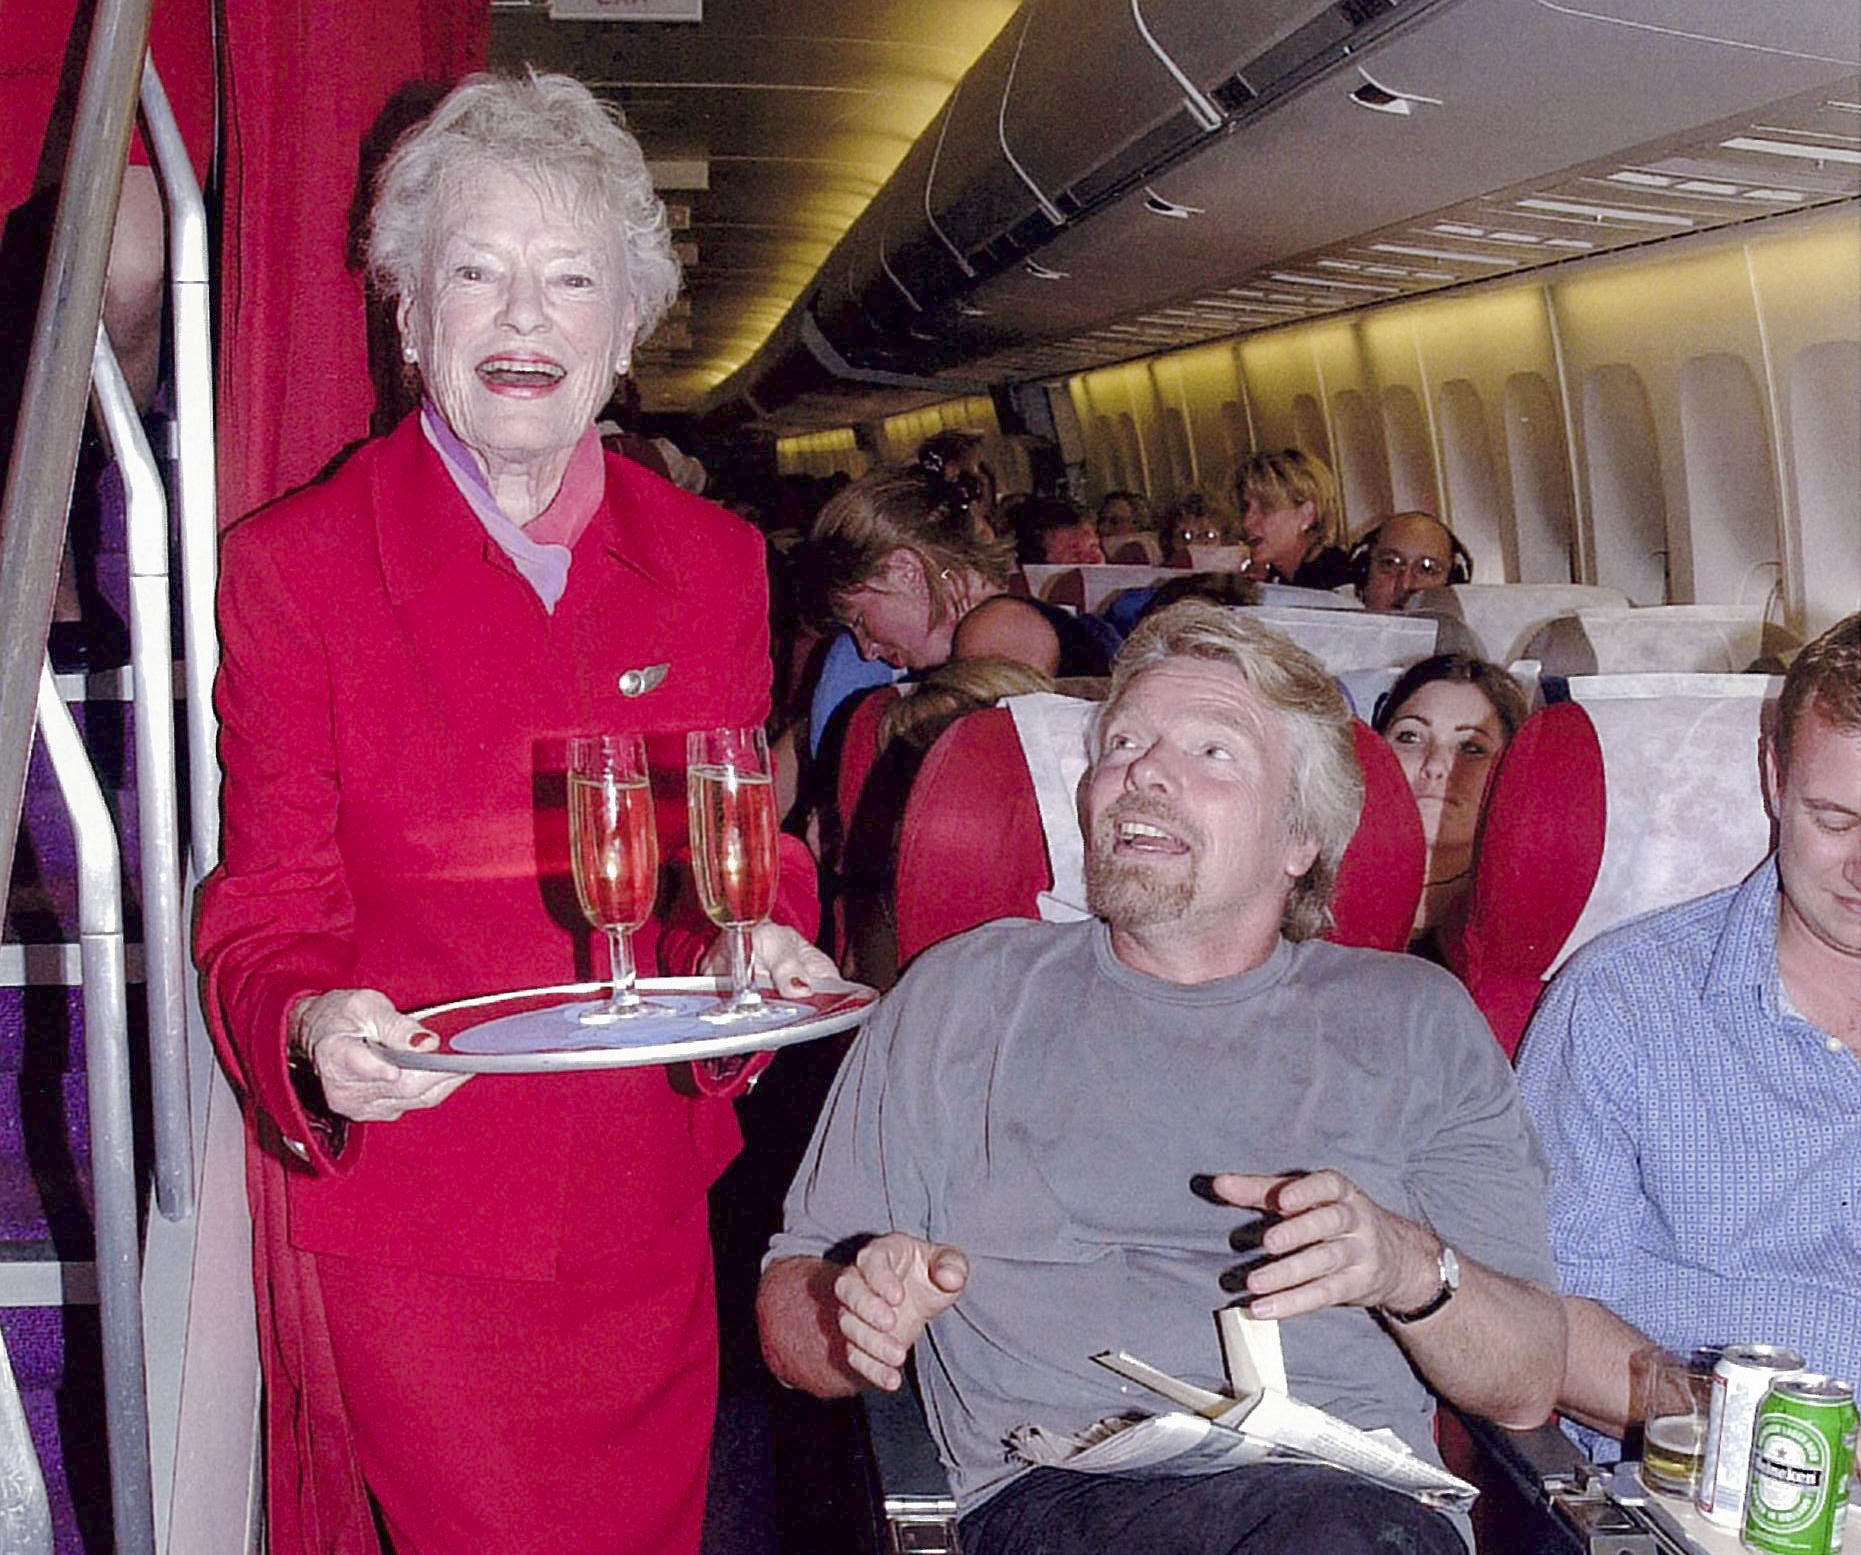 Eve Branson and Richard Branson on a Virgin Atlantic flight